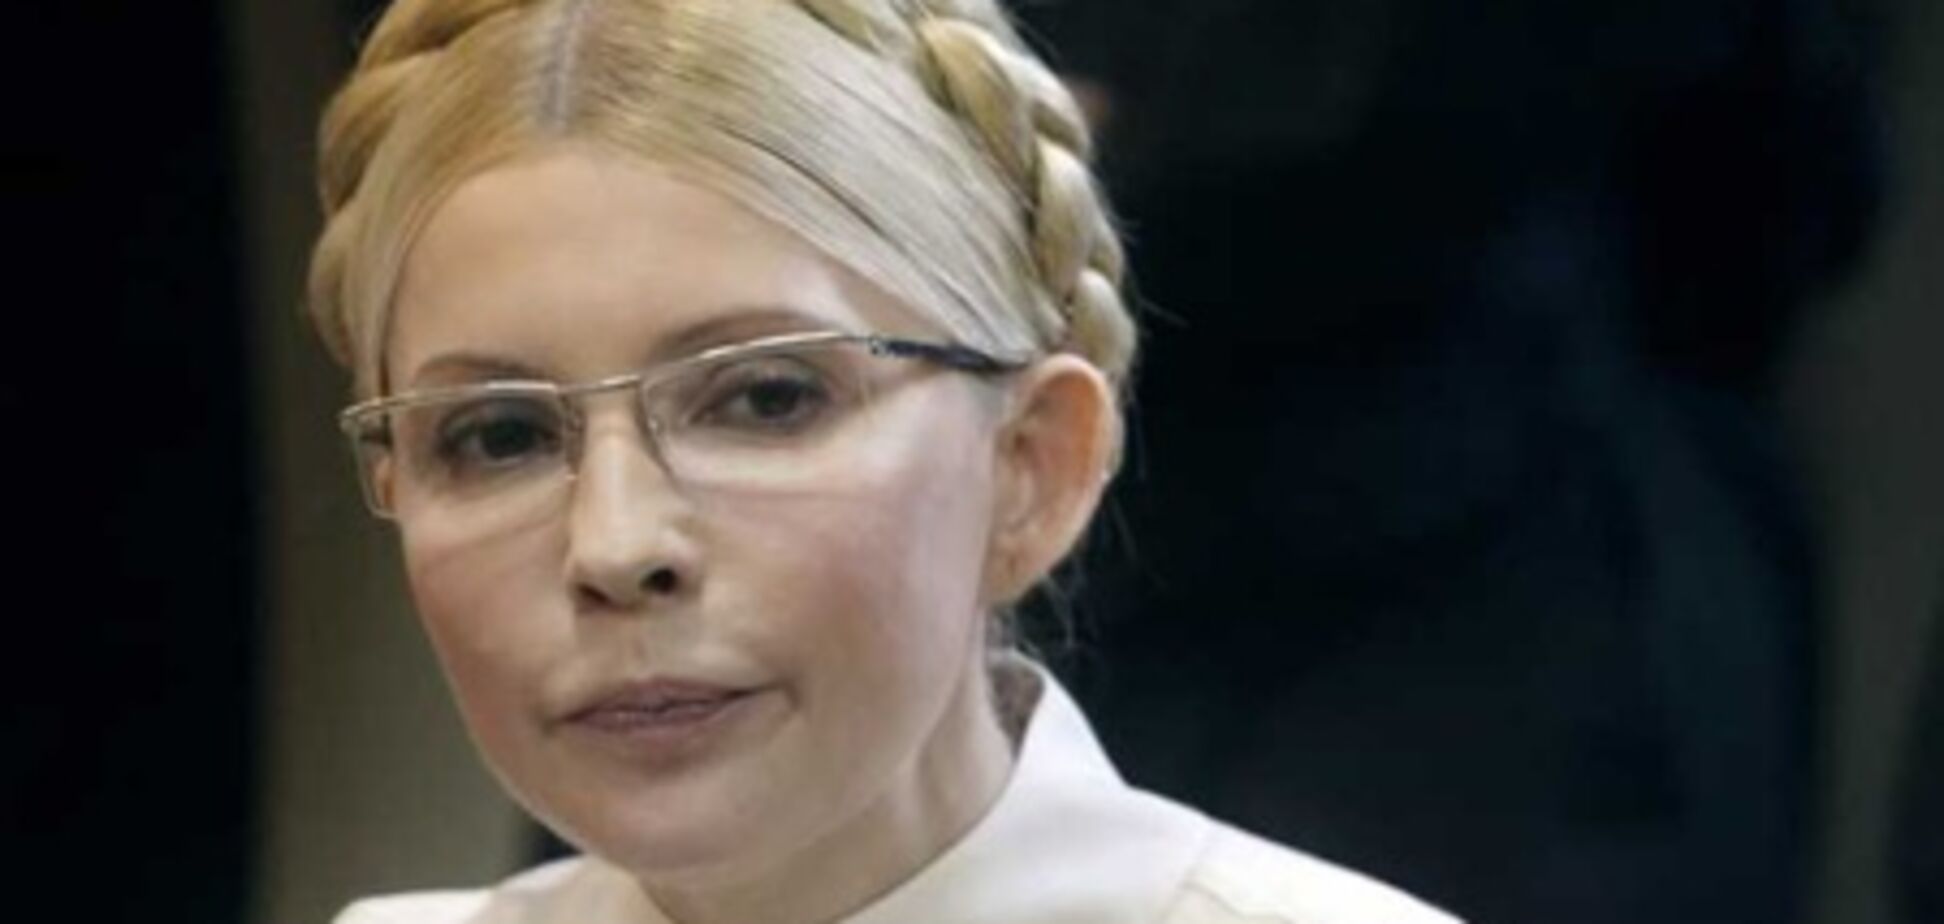 Обиход: Евросоюз не знает о 'карьерном пути' Тимошенко